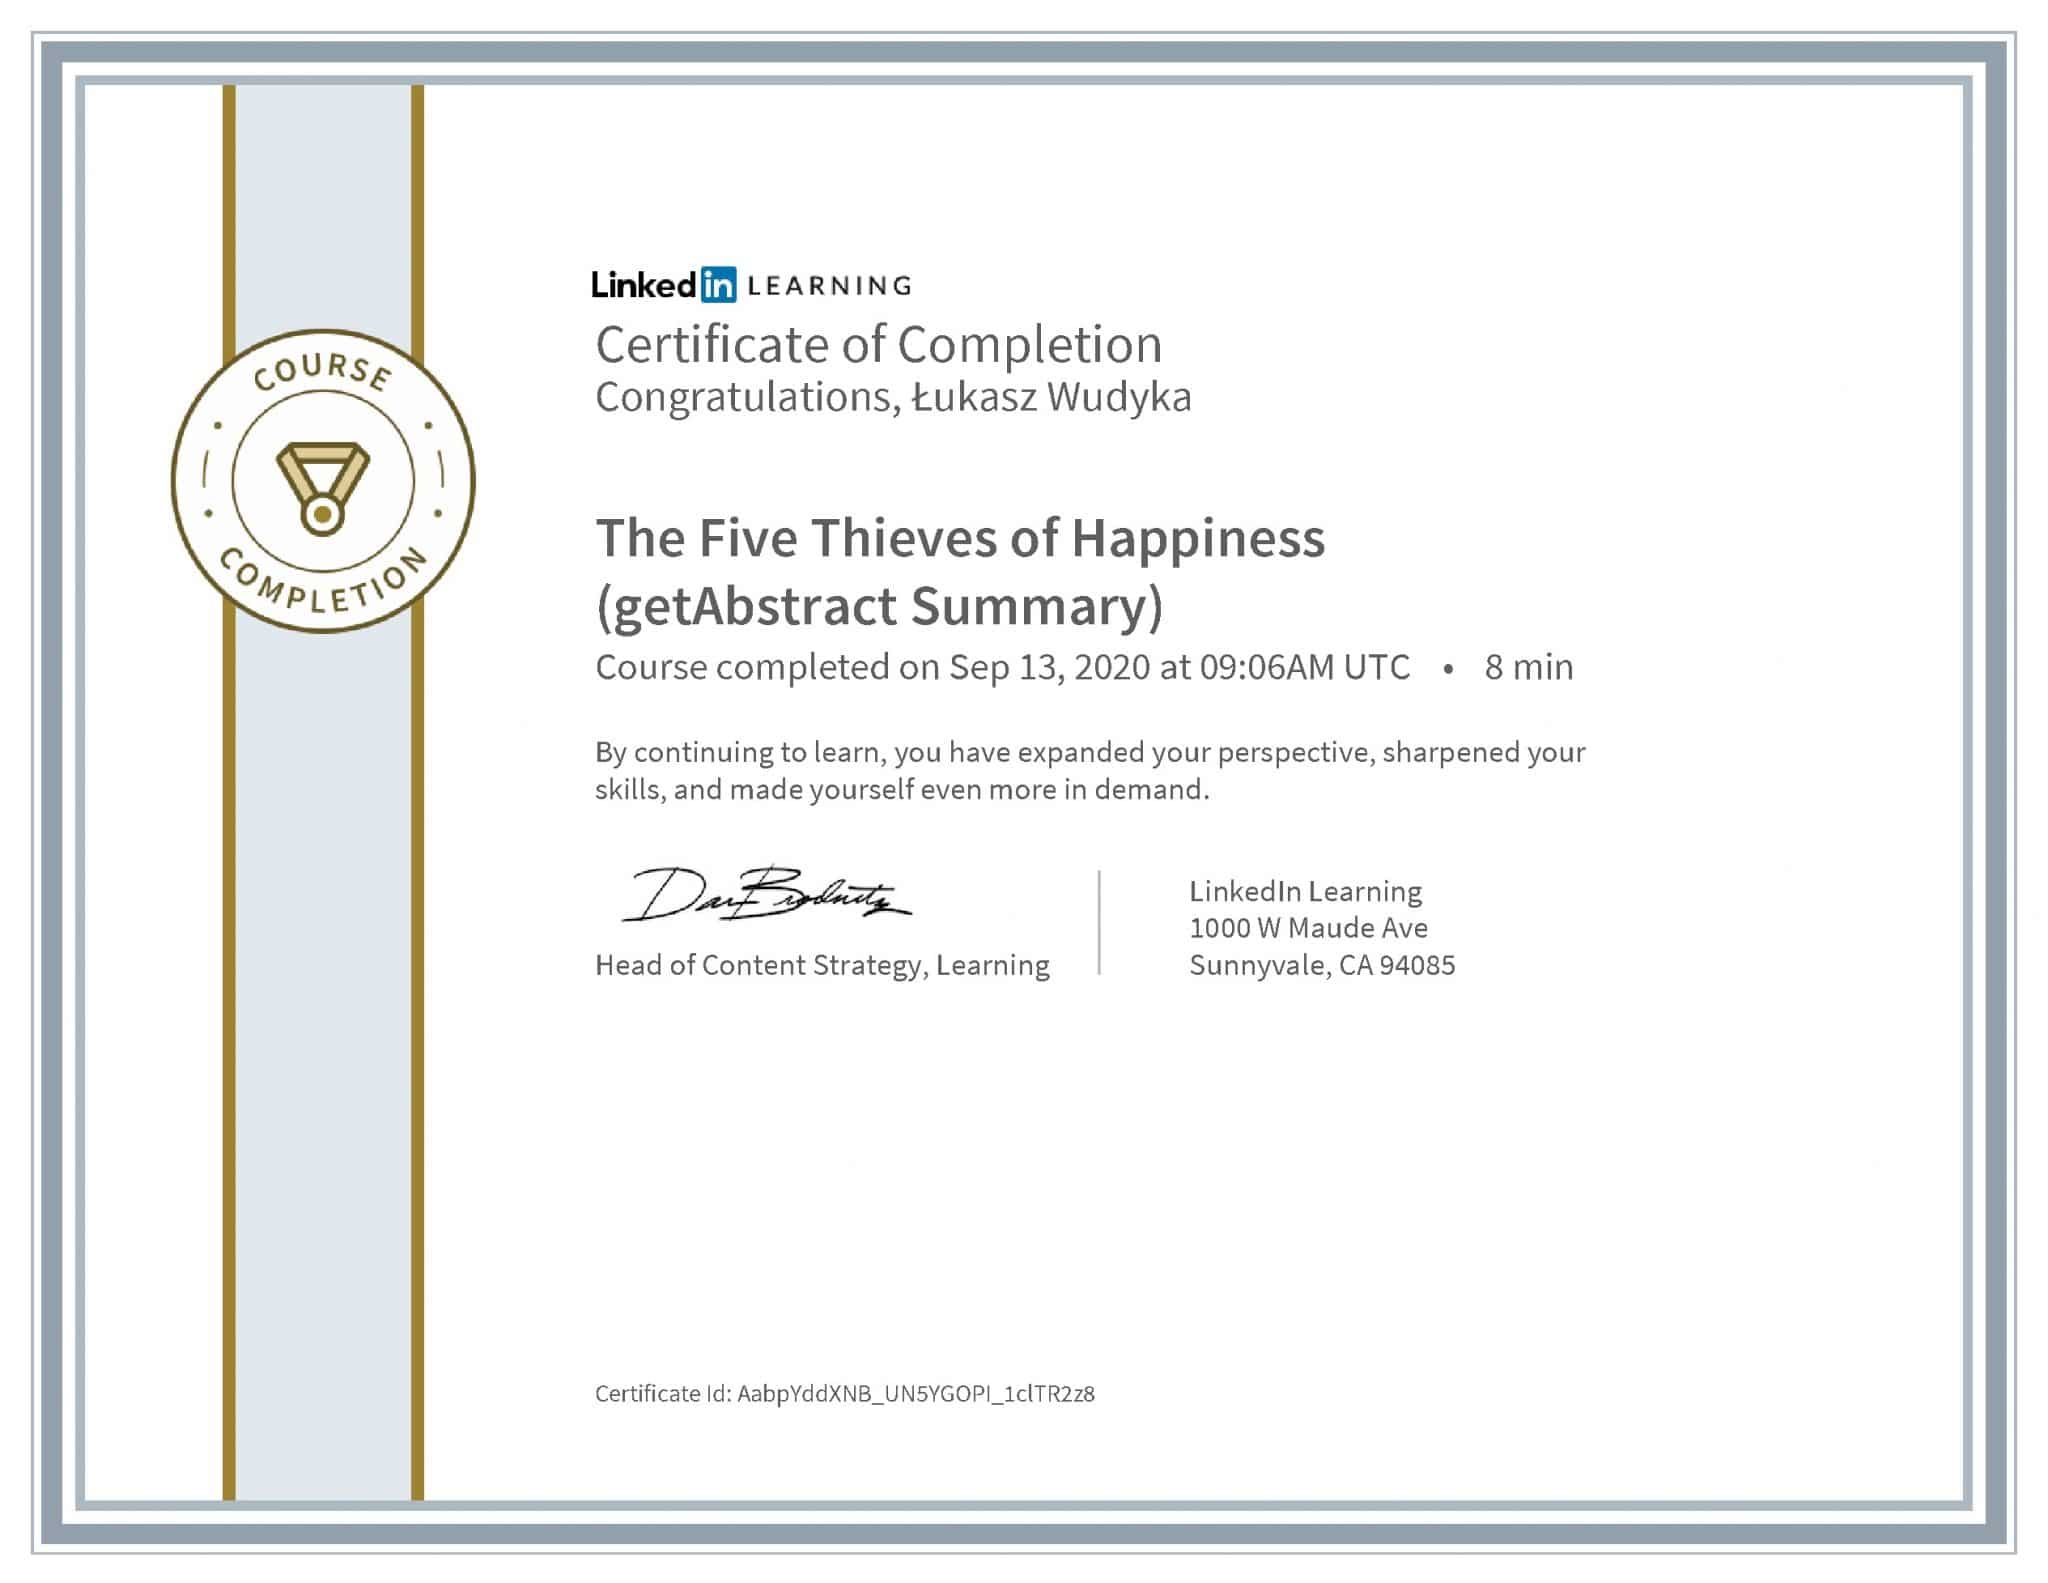 Łukasz Wudyka certyfikat LinkedIn The Five Thieves of Happiness (getAbstract Summary)